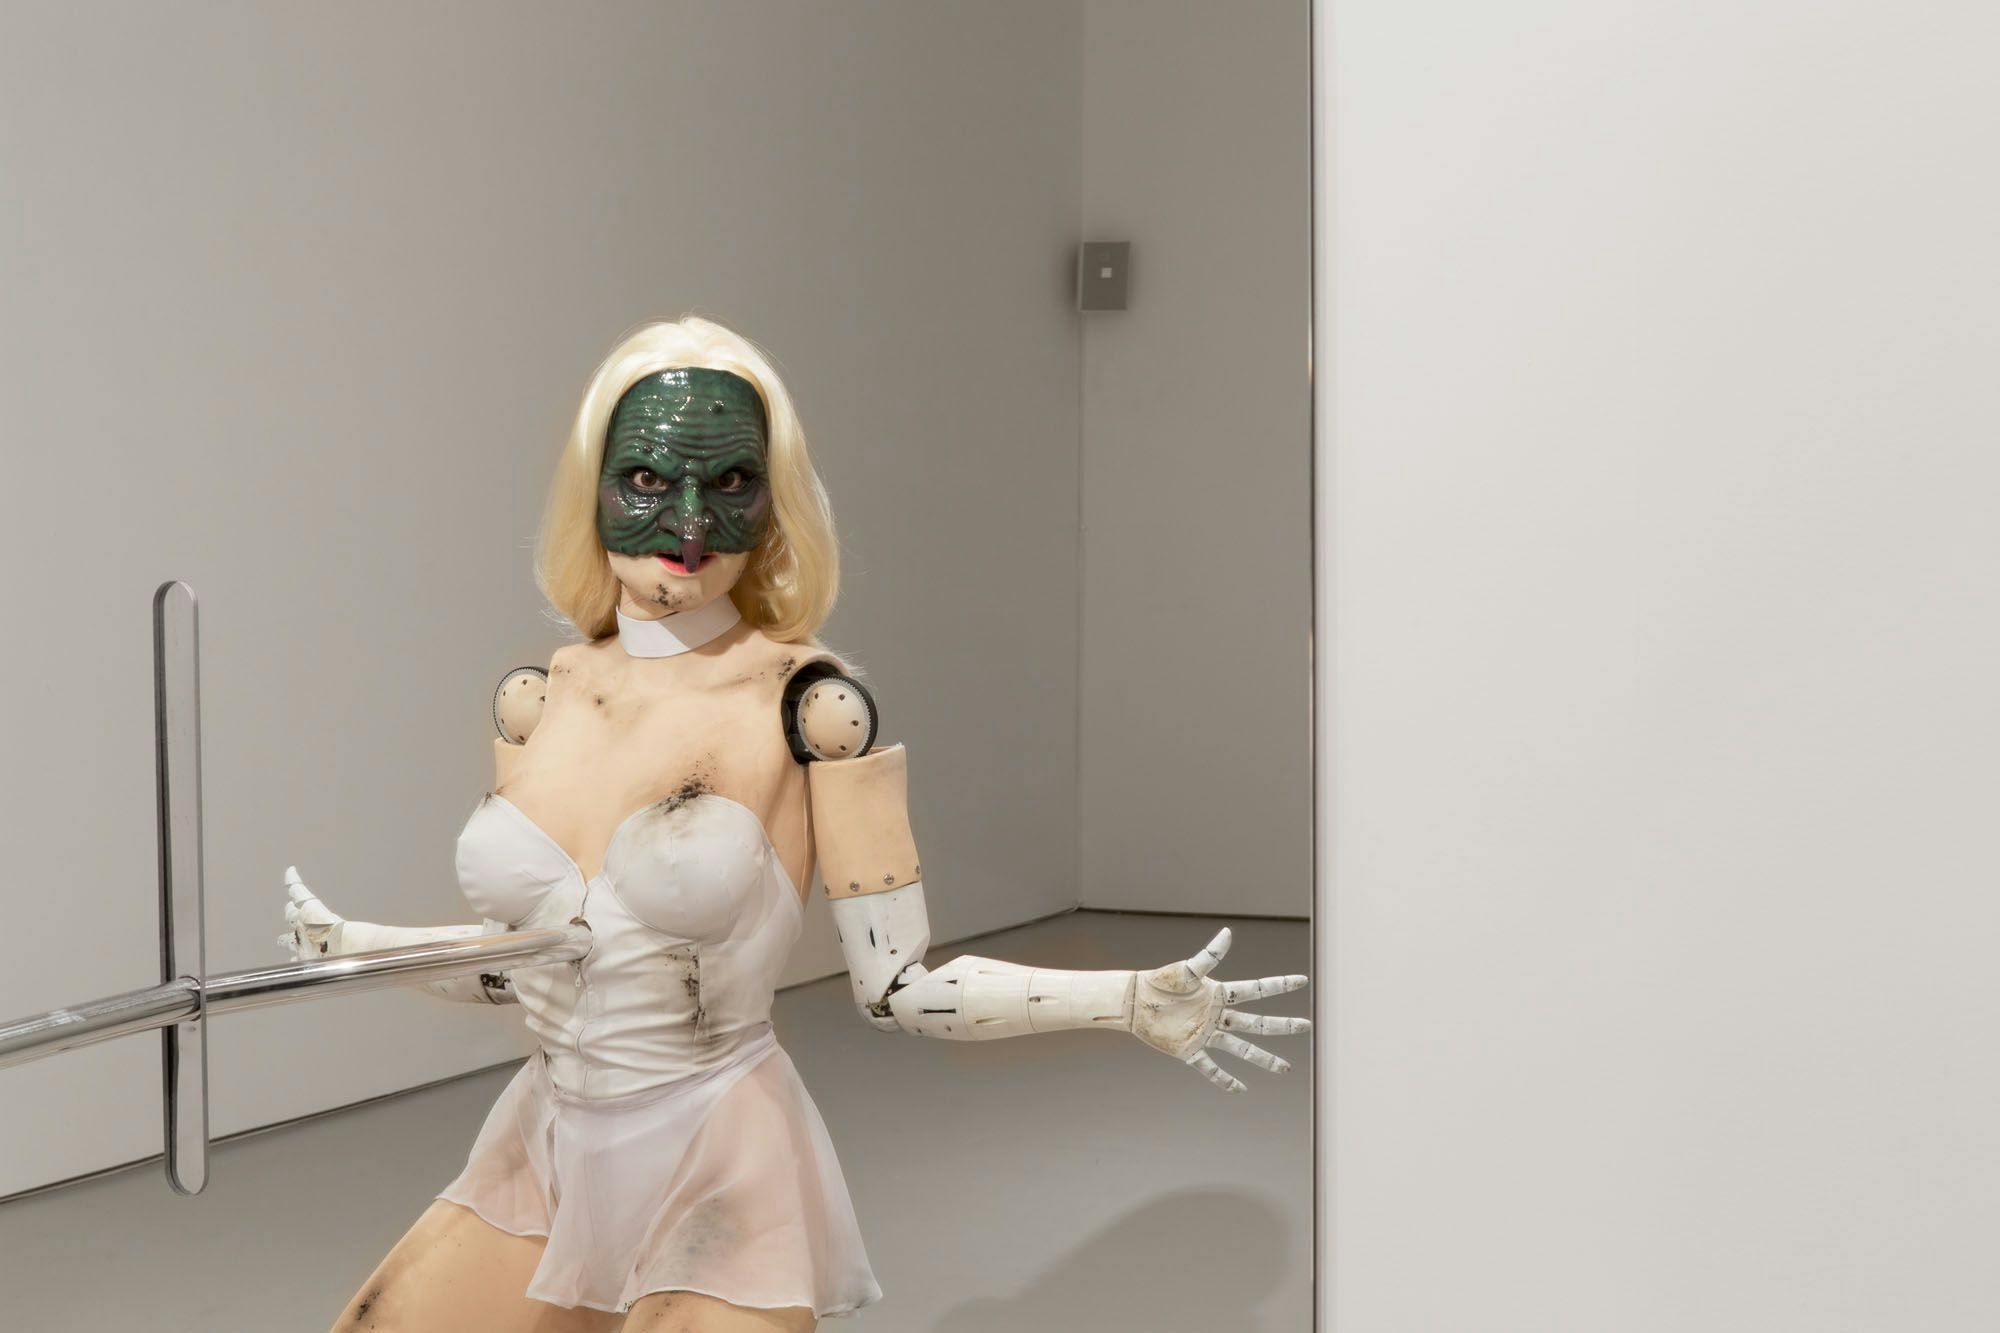 An installation view featuring a sculpture by Jordan Wolfson, titled (Female figure), dated 2014